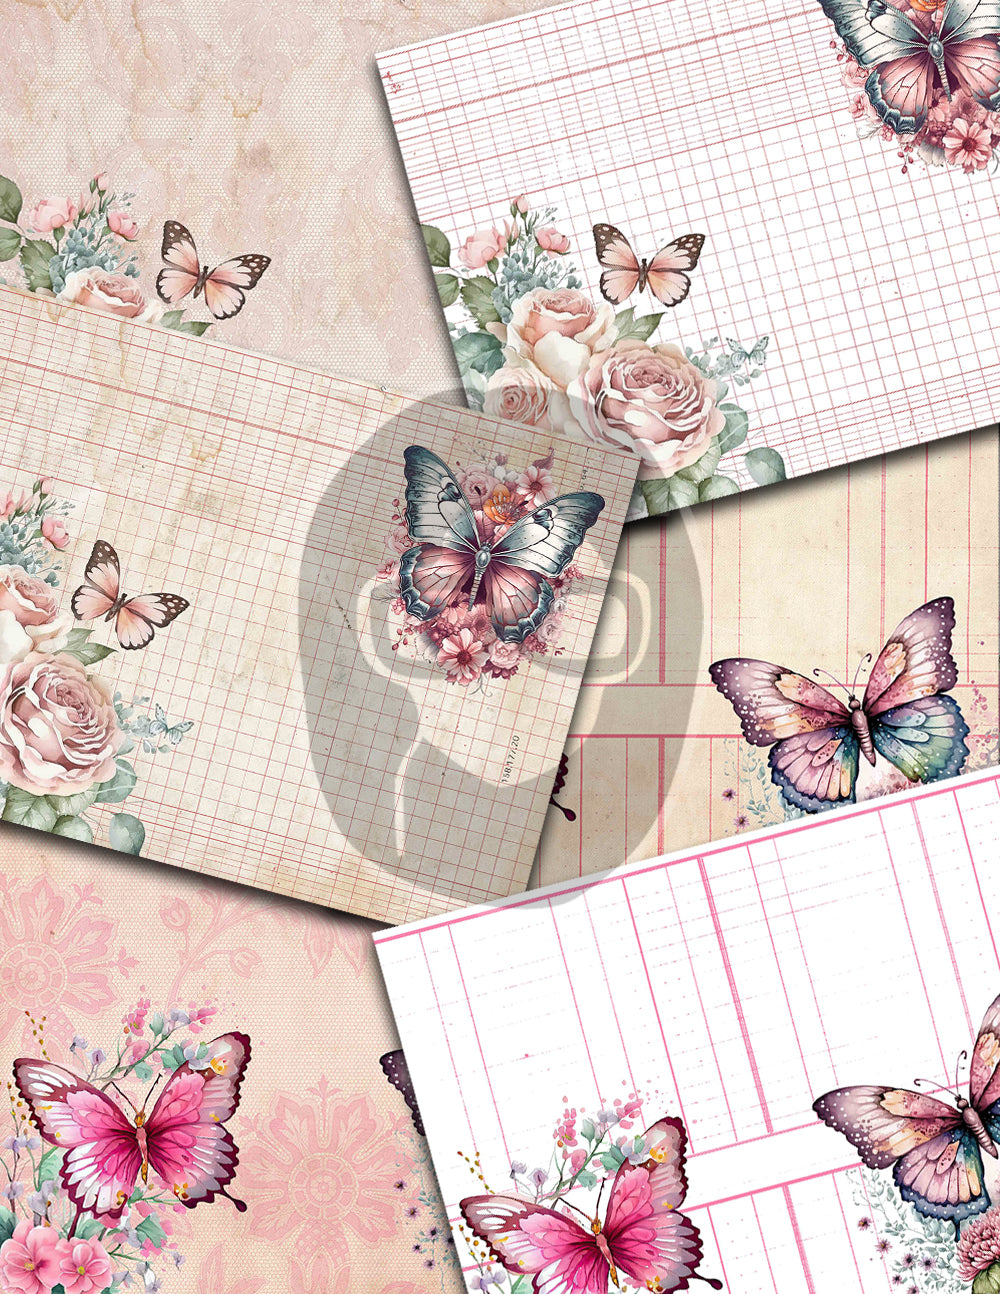 Junk Journal Pages, Butterfly Journal Printable -36pg Digital Download- Pink Digital Paper, Ephemera Background, Collage Sheets Printable